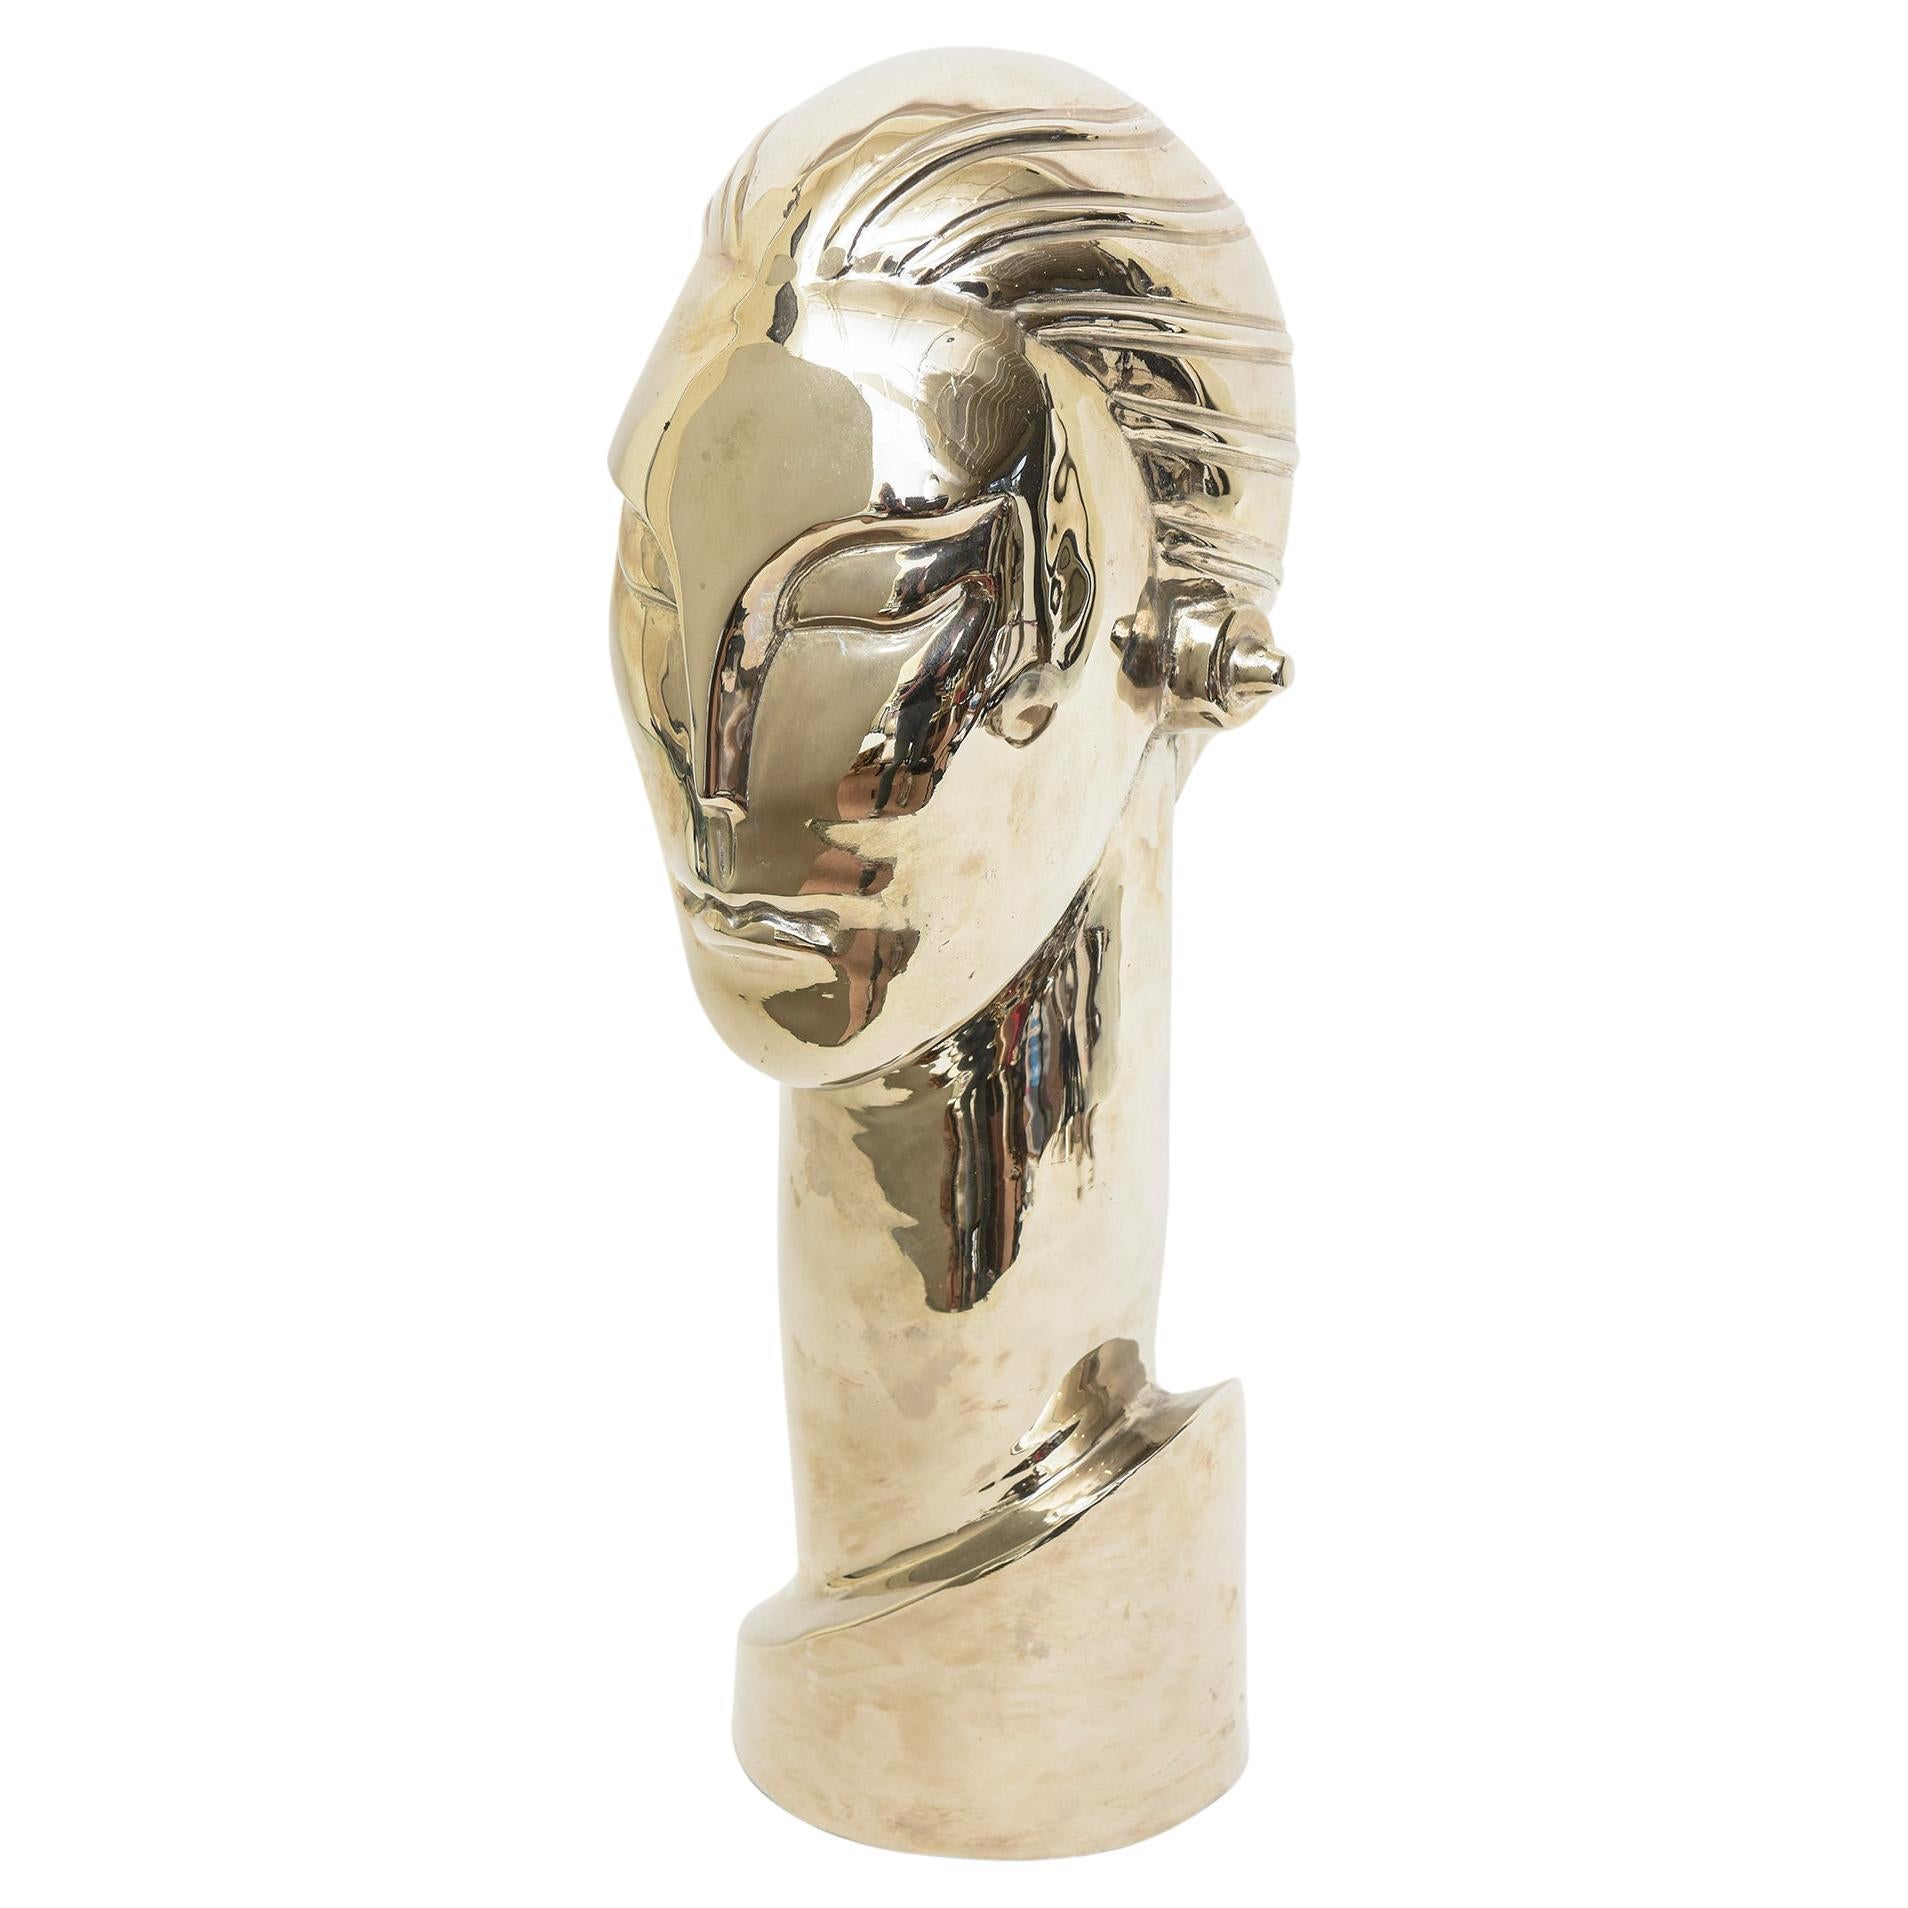 Nickel Silver Over Brass Art Deco Stylized Tall Head Bust Figurative Sculpture 